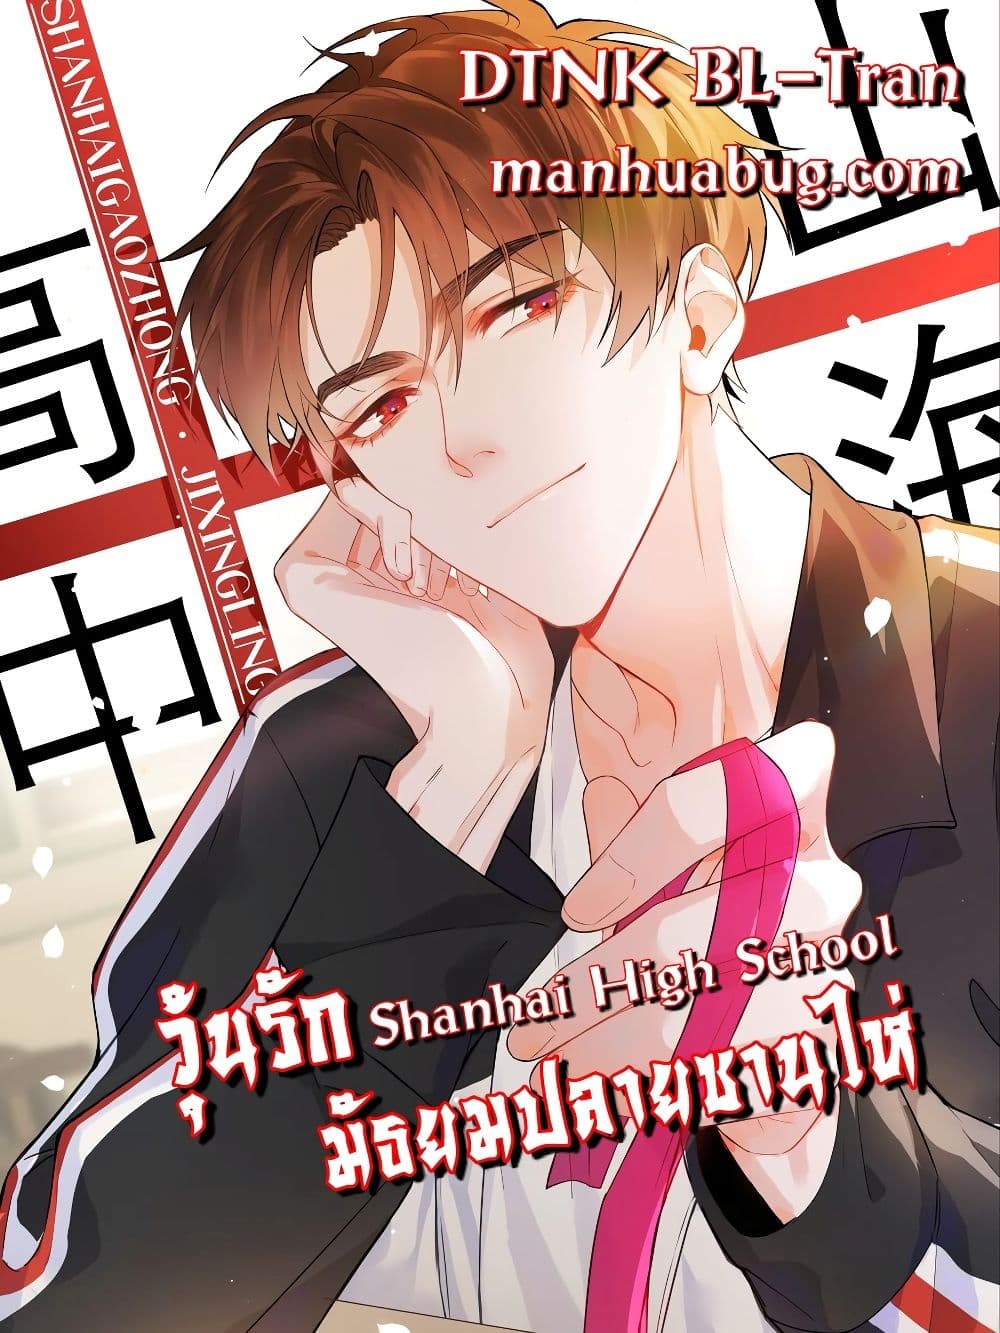 Shanhai High School - วุ่นรัก มัธยมปลายซานไห่ 11-11